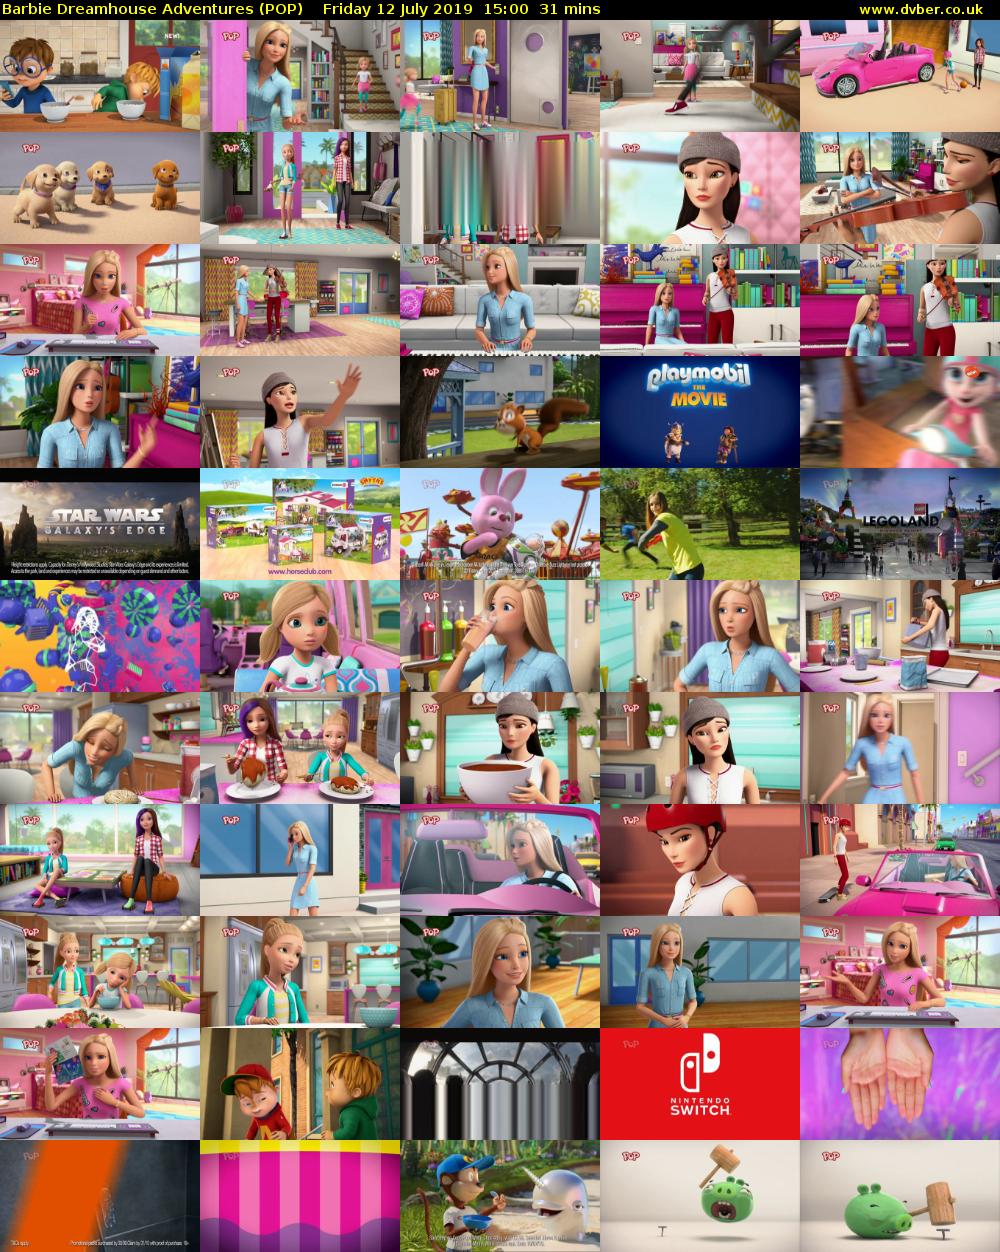 Barbie Dreamhouse Adventures (POP) Friday 12 July 2019 15:00 - 15:31